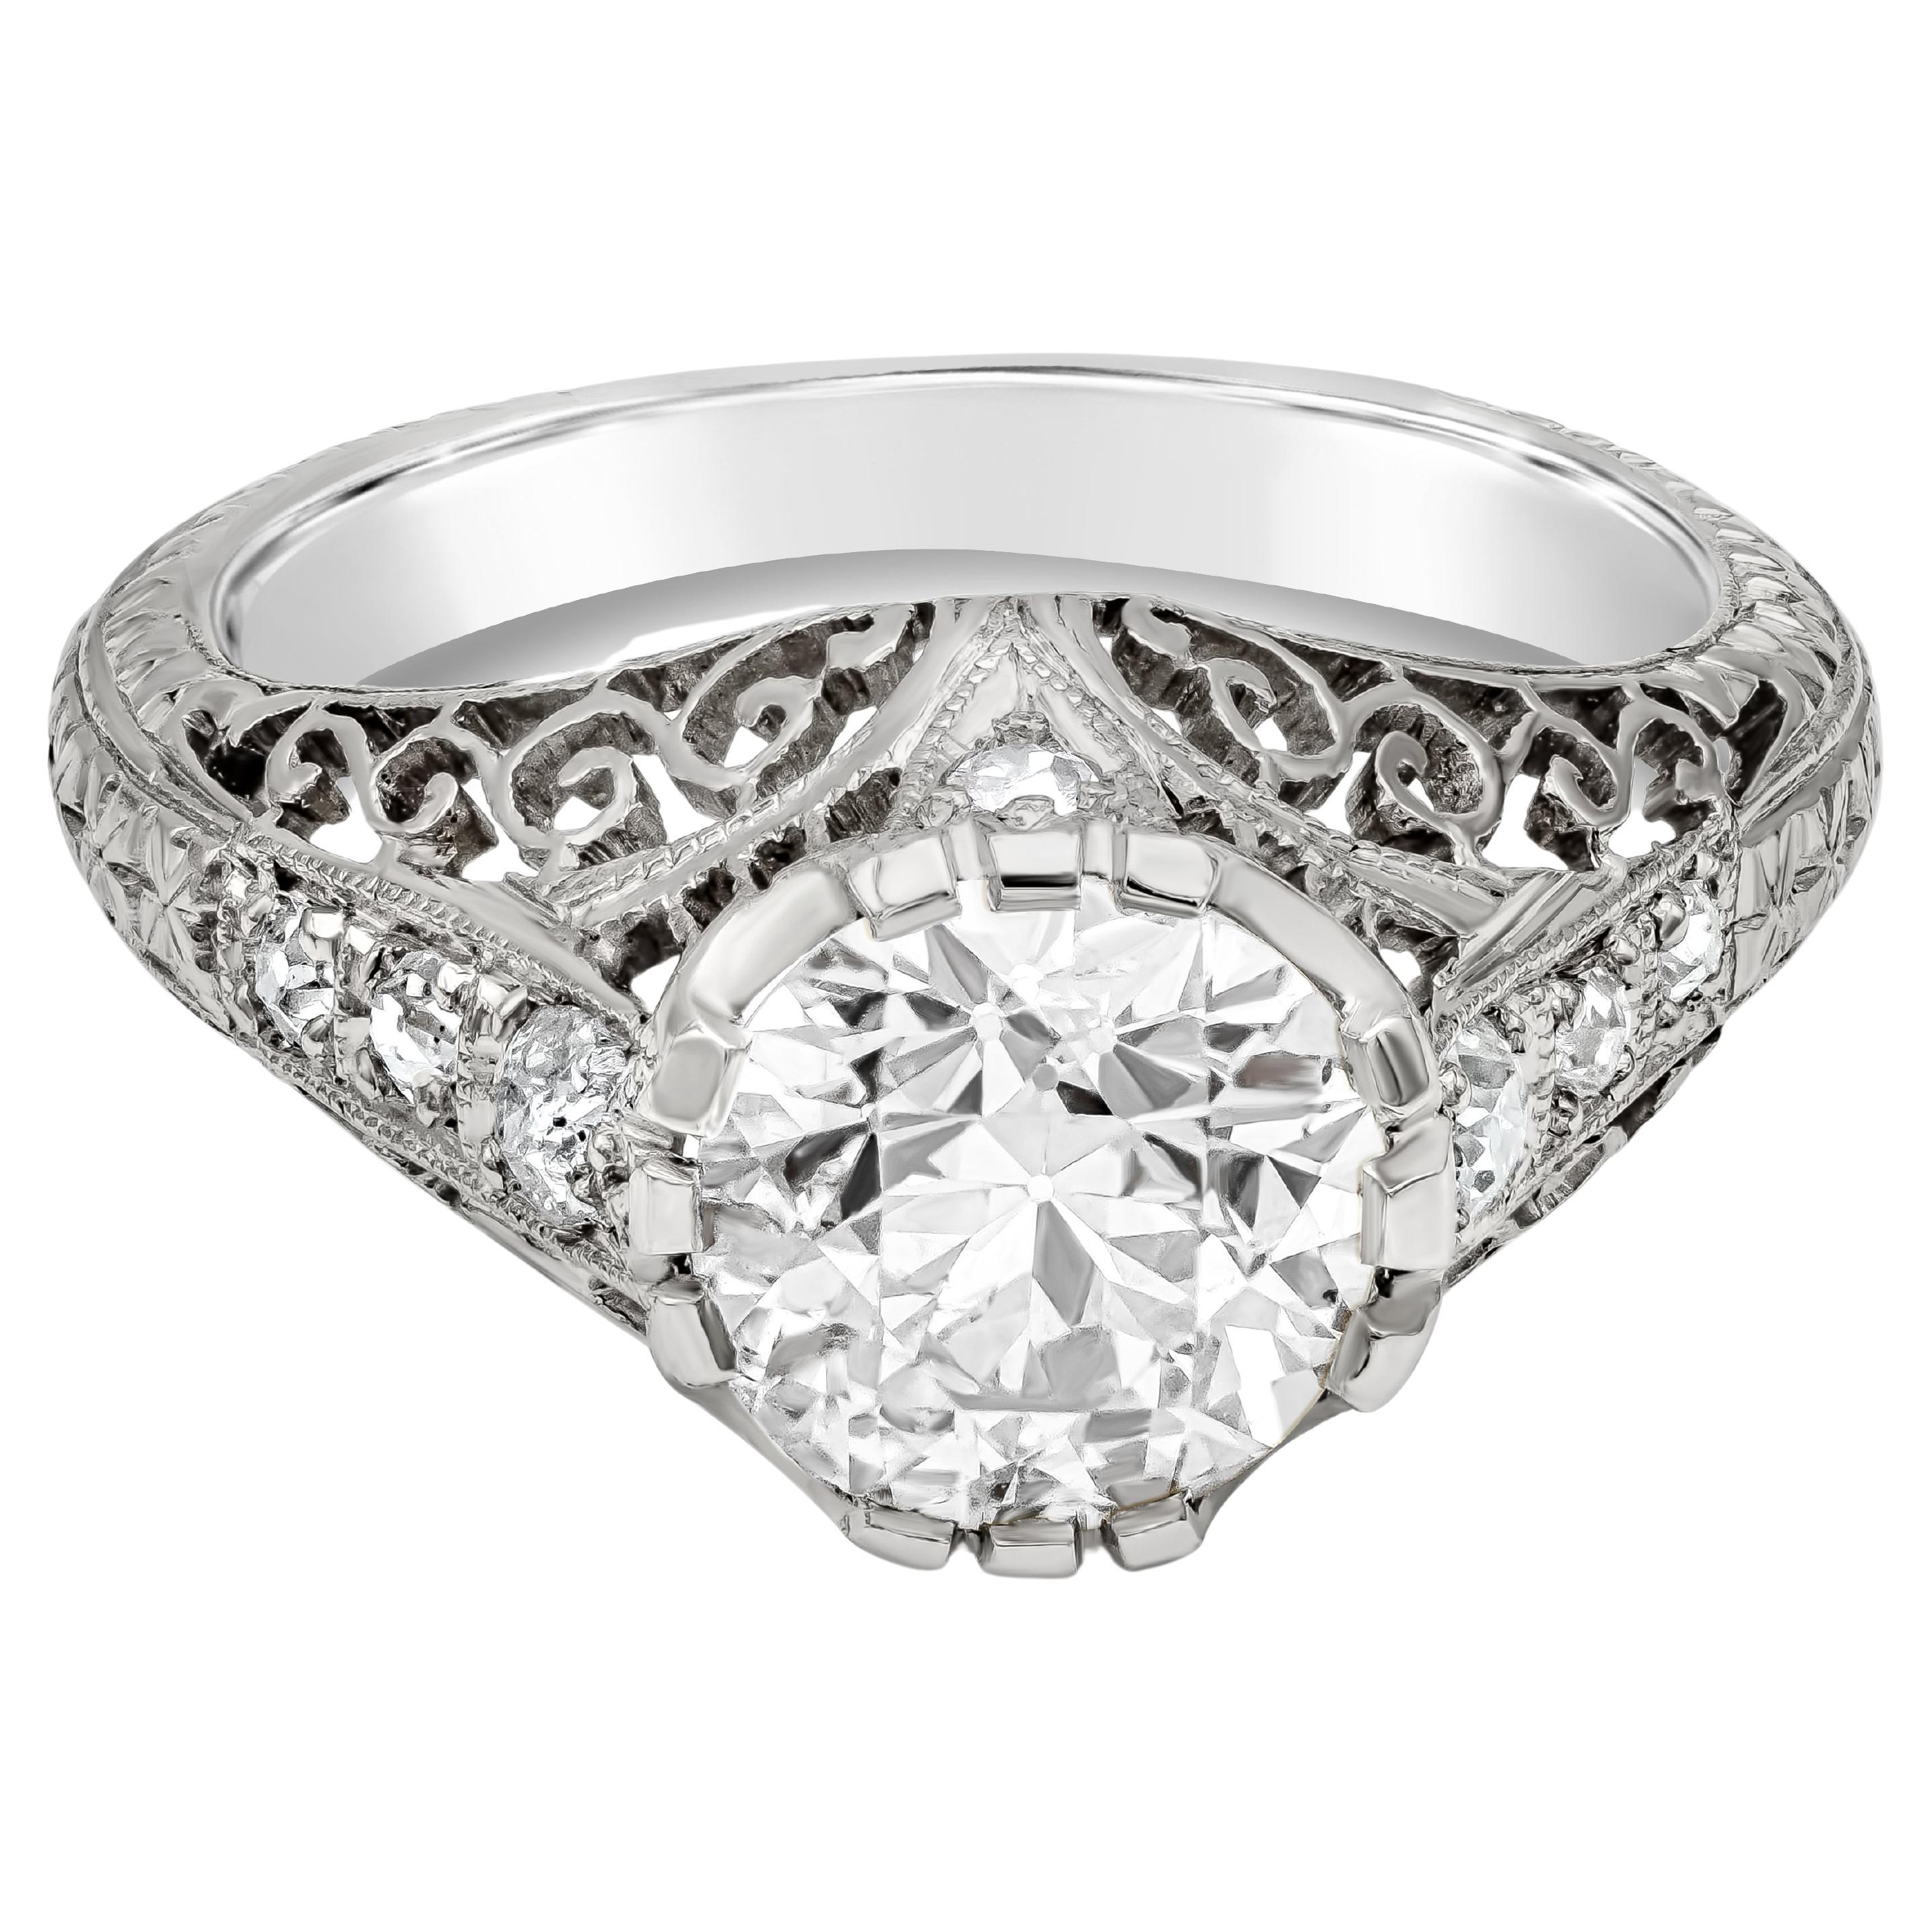 Antique Old European Cut Diamond Art Deco Engagement Ring For Sale